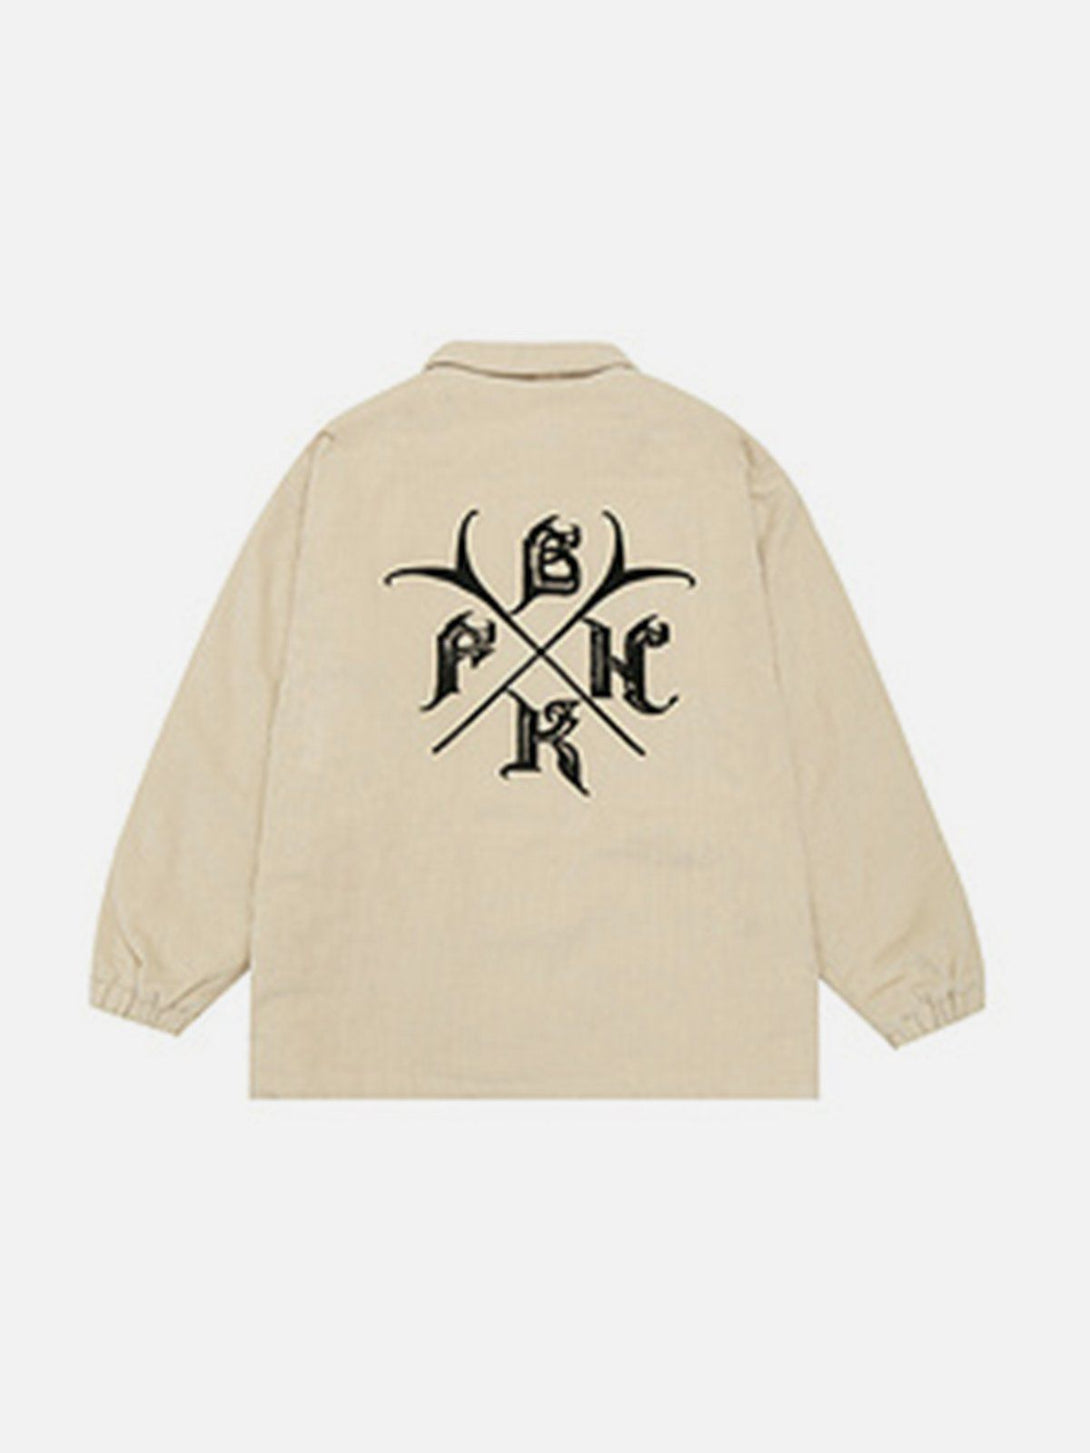 Majesda® - Gothic Monogram Embroidered Corduroy Winter Coat outfit ideas streetwear fashion